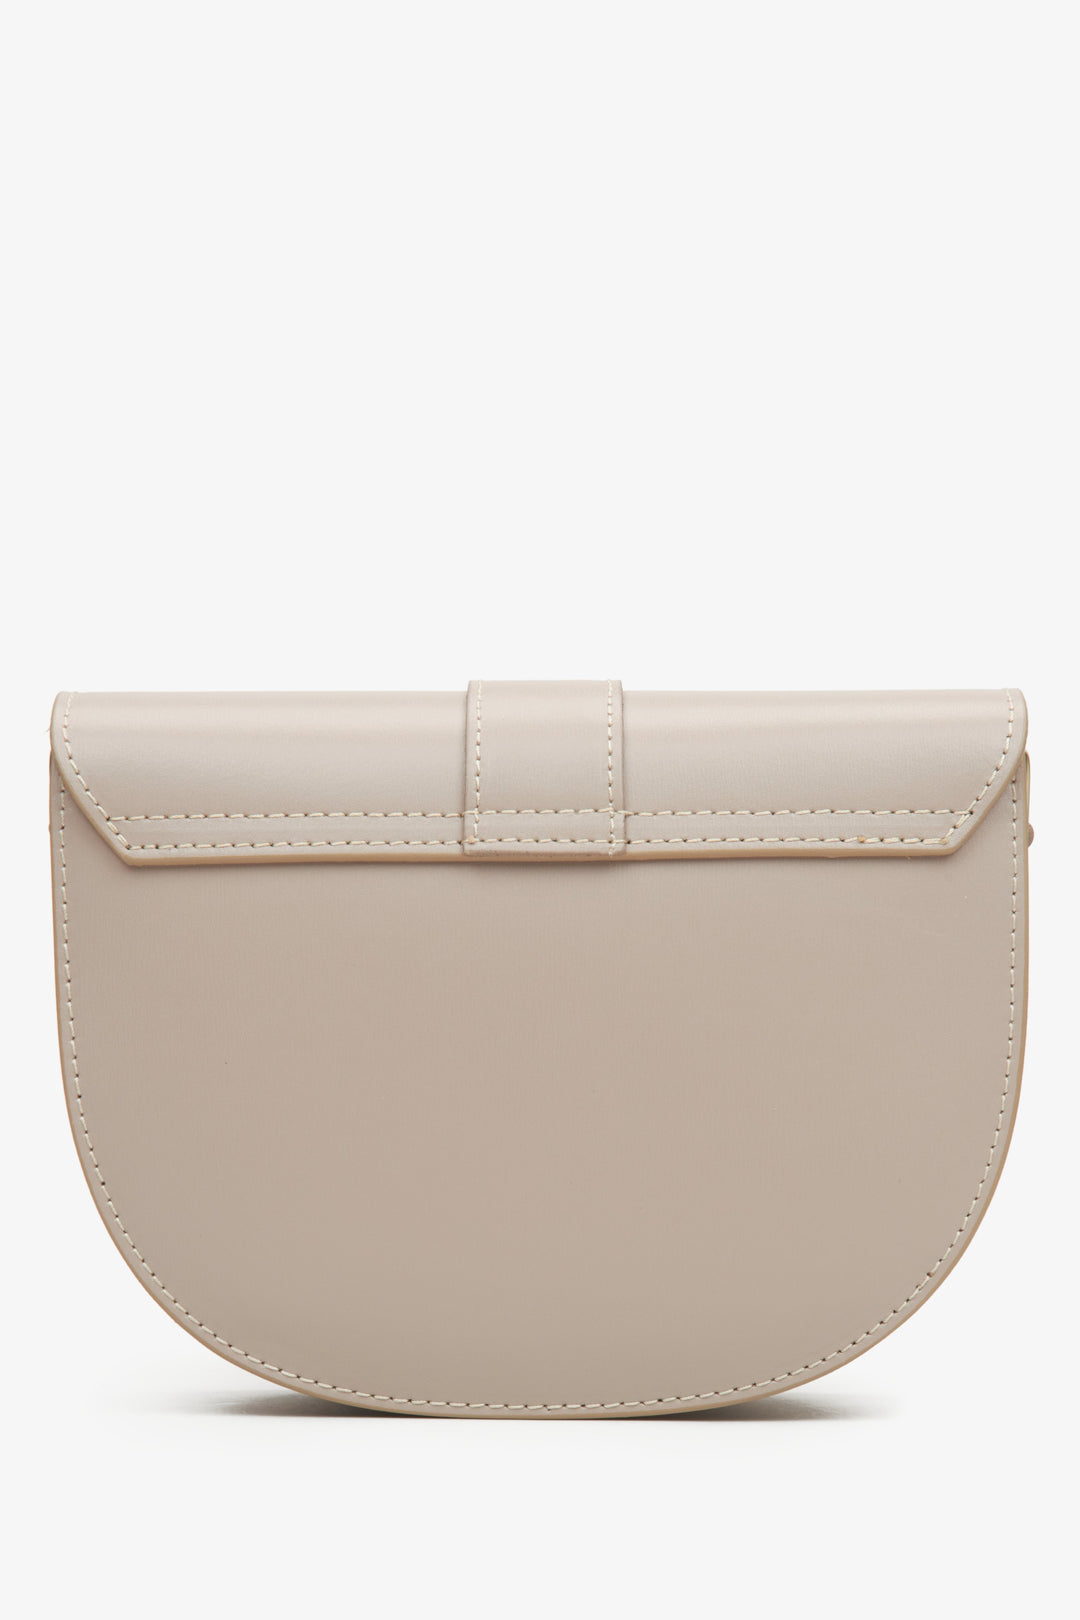 Estro women's beige crescent-shaped handbag made of genuine leather - back view presentation of the model.